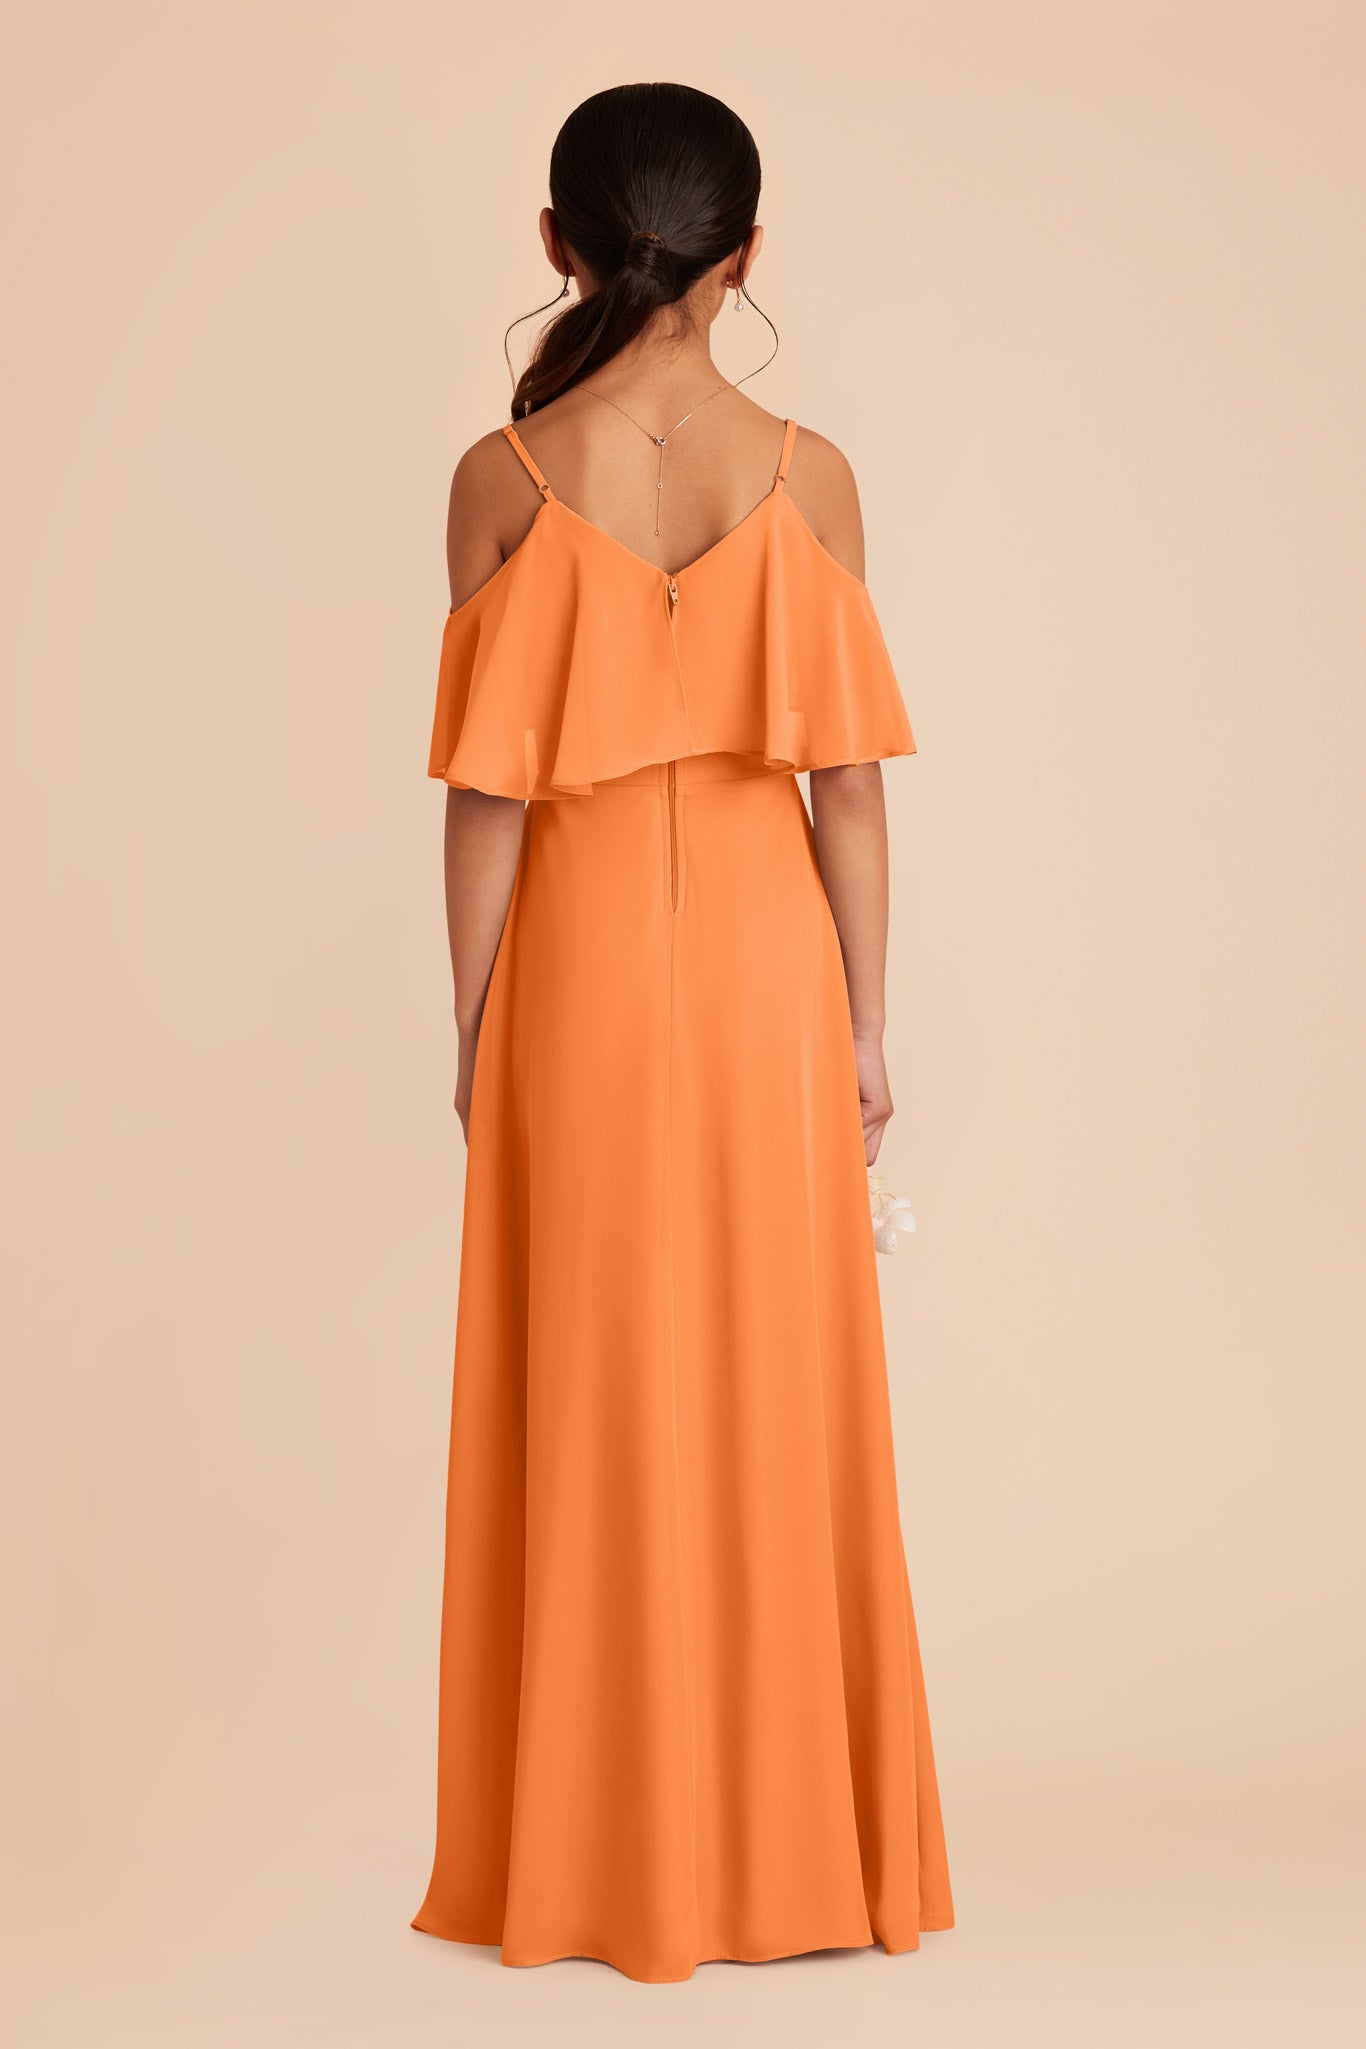 Apricot Janie Convertible Junior Dress by Birdy Grey